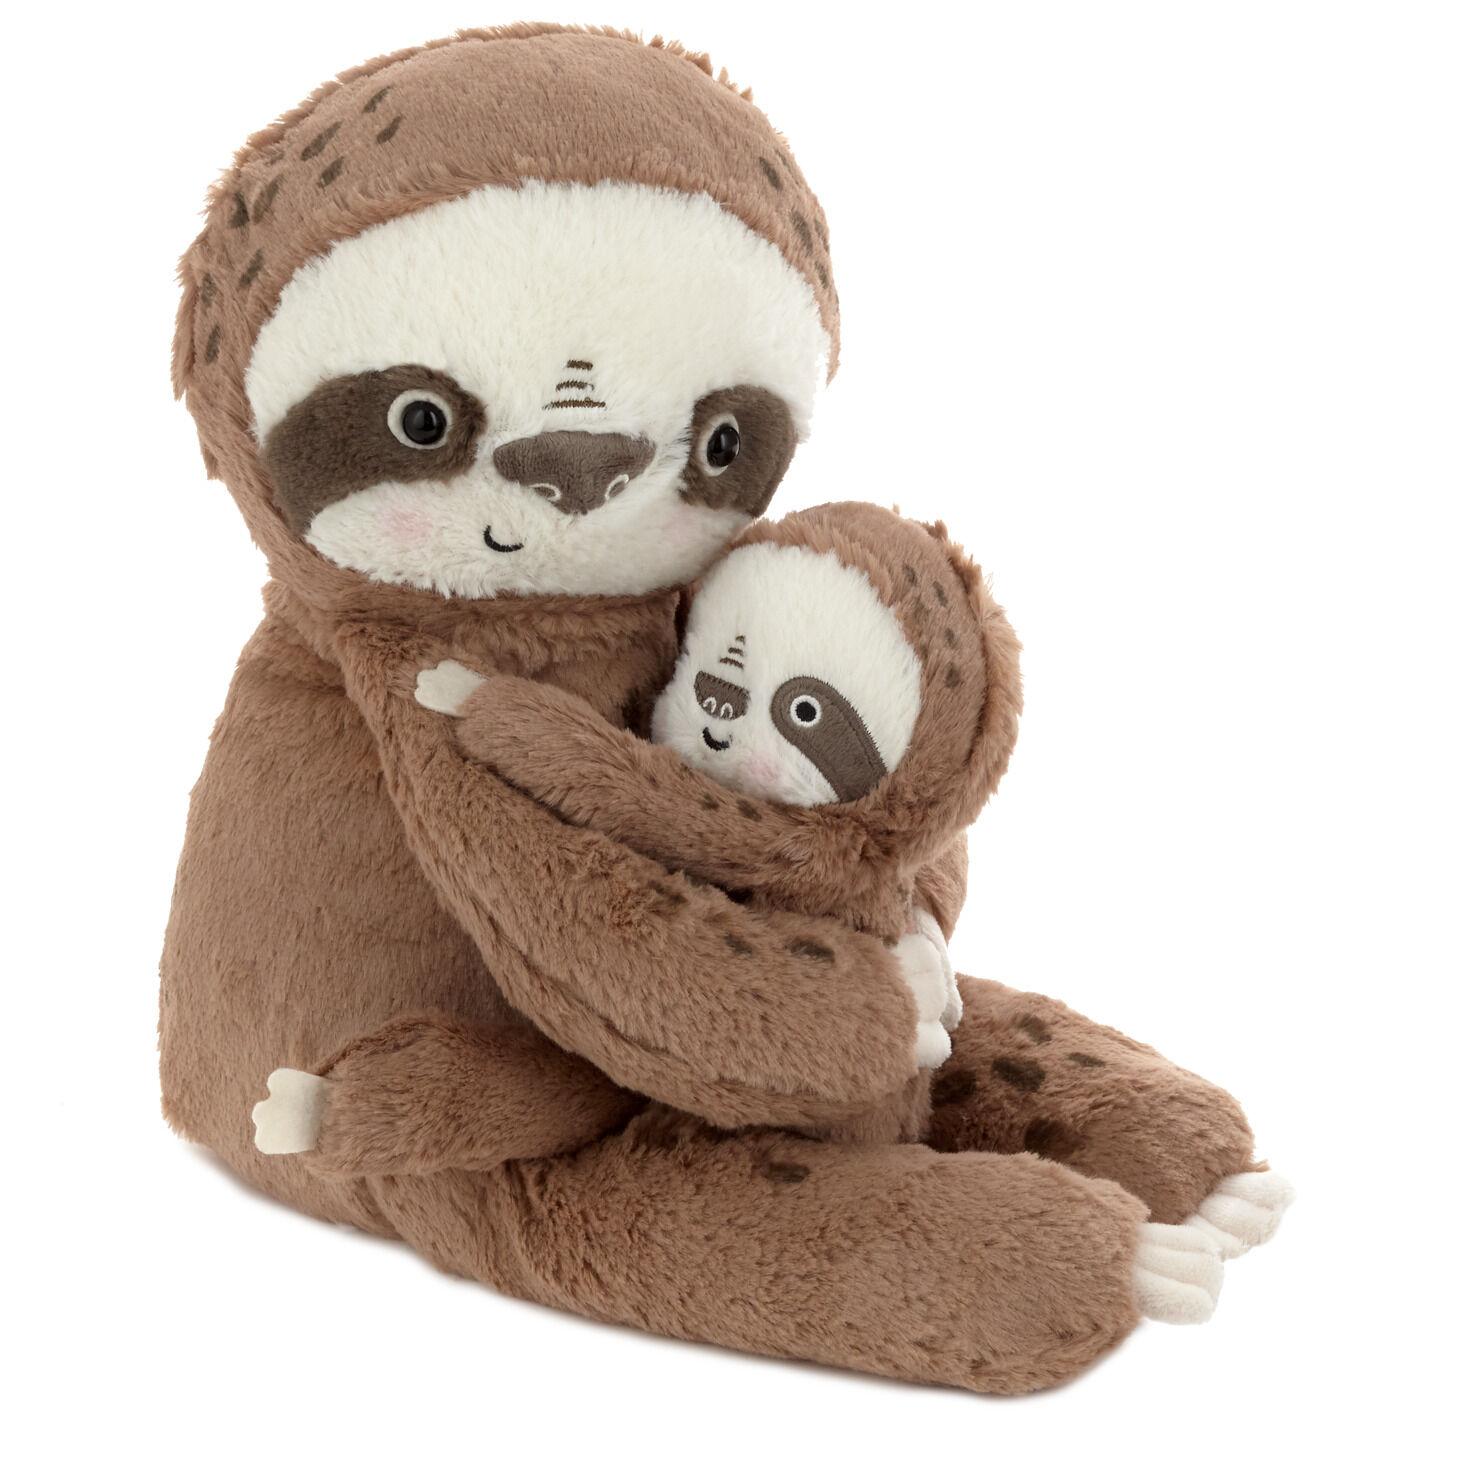 hallmark sloth stuffed animal